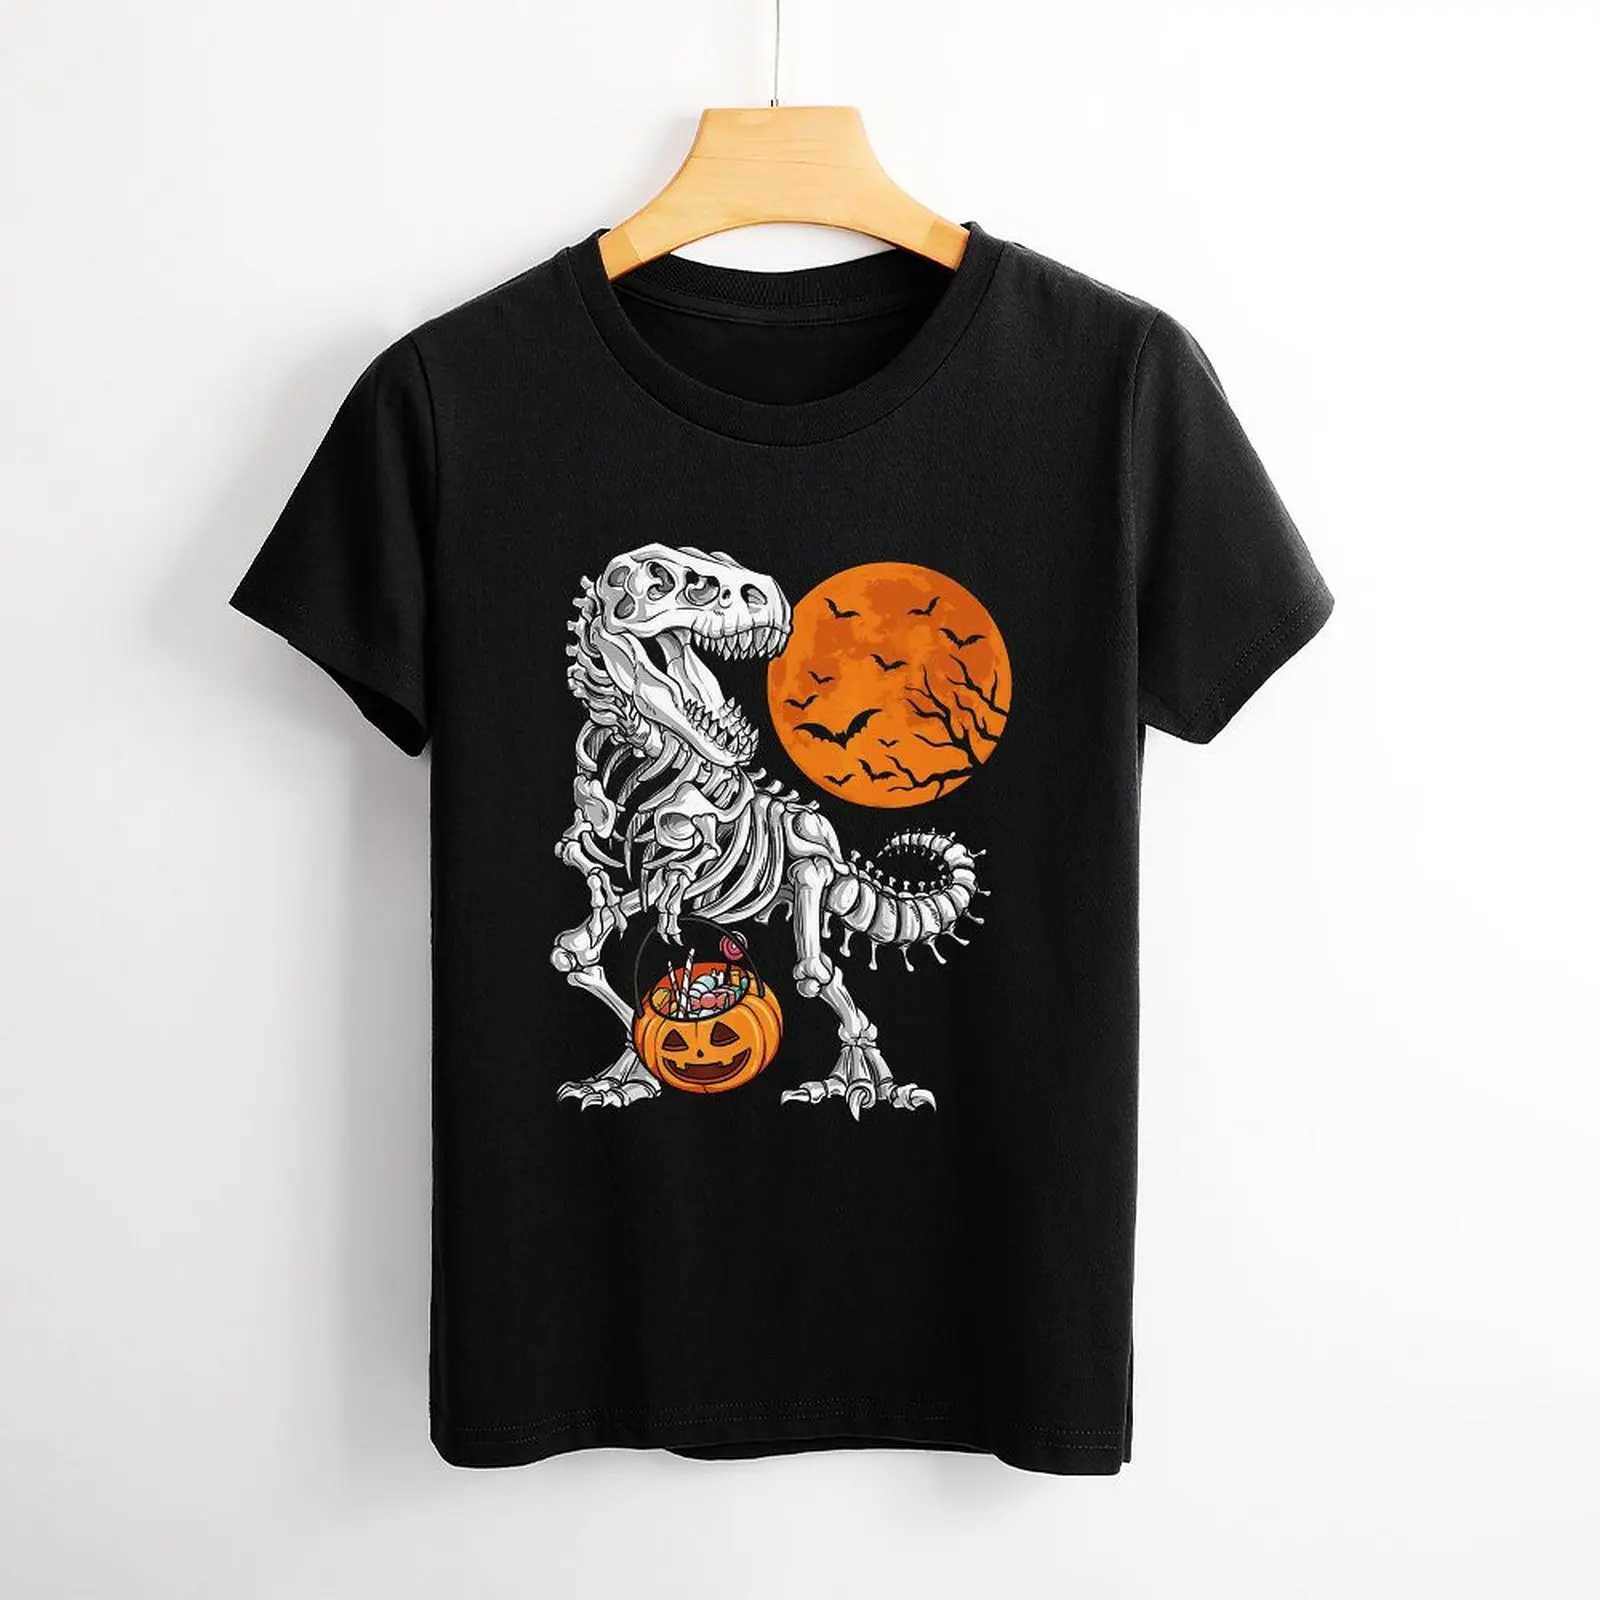 T-shirt féminin Hallown Dinosaur squelette imprime